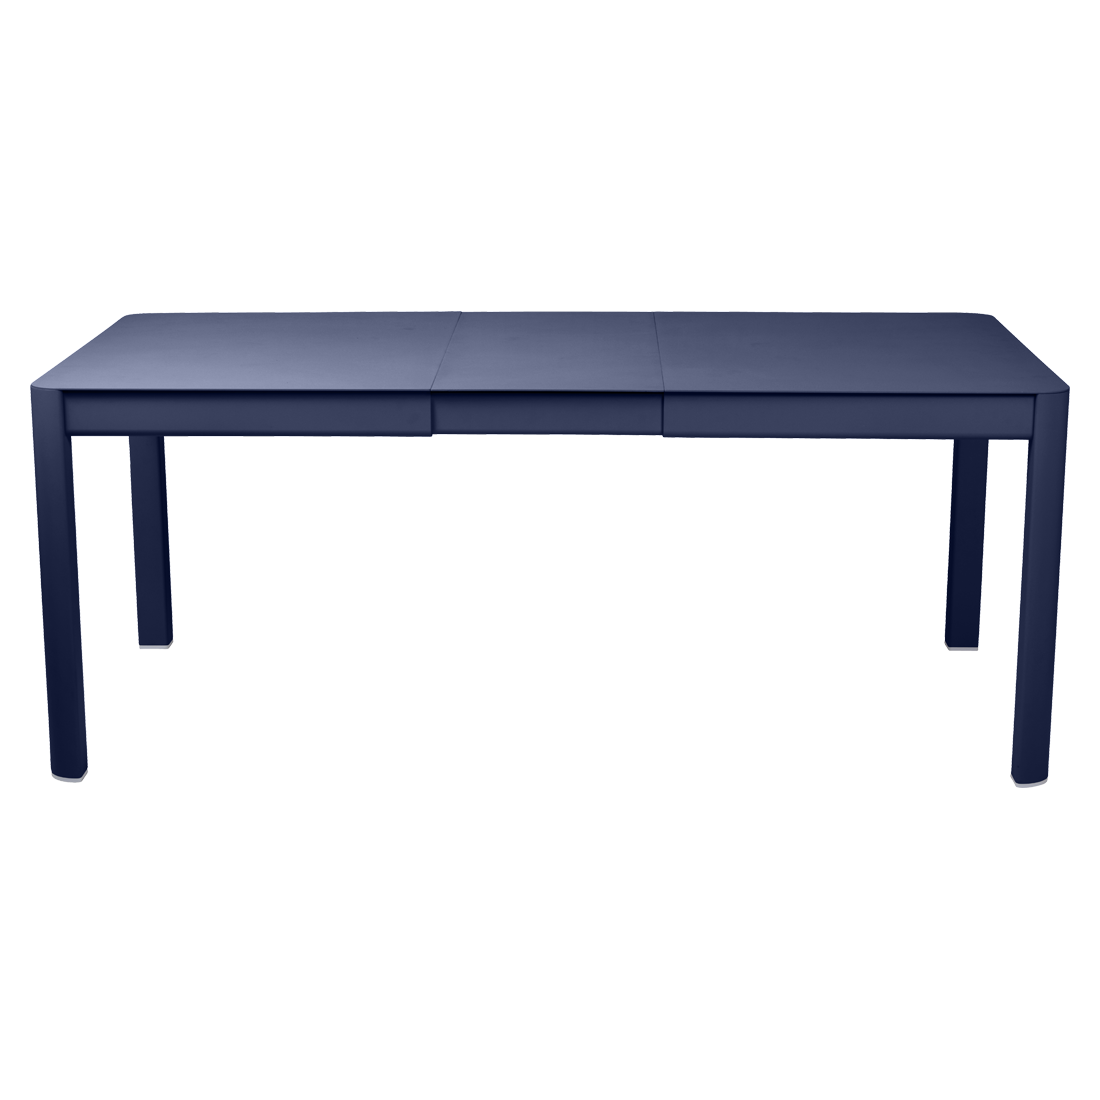 table de jardin bleu, table metal allonge, table metal a rallonge, table metal rectangulaire, table fermob allonge